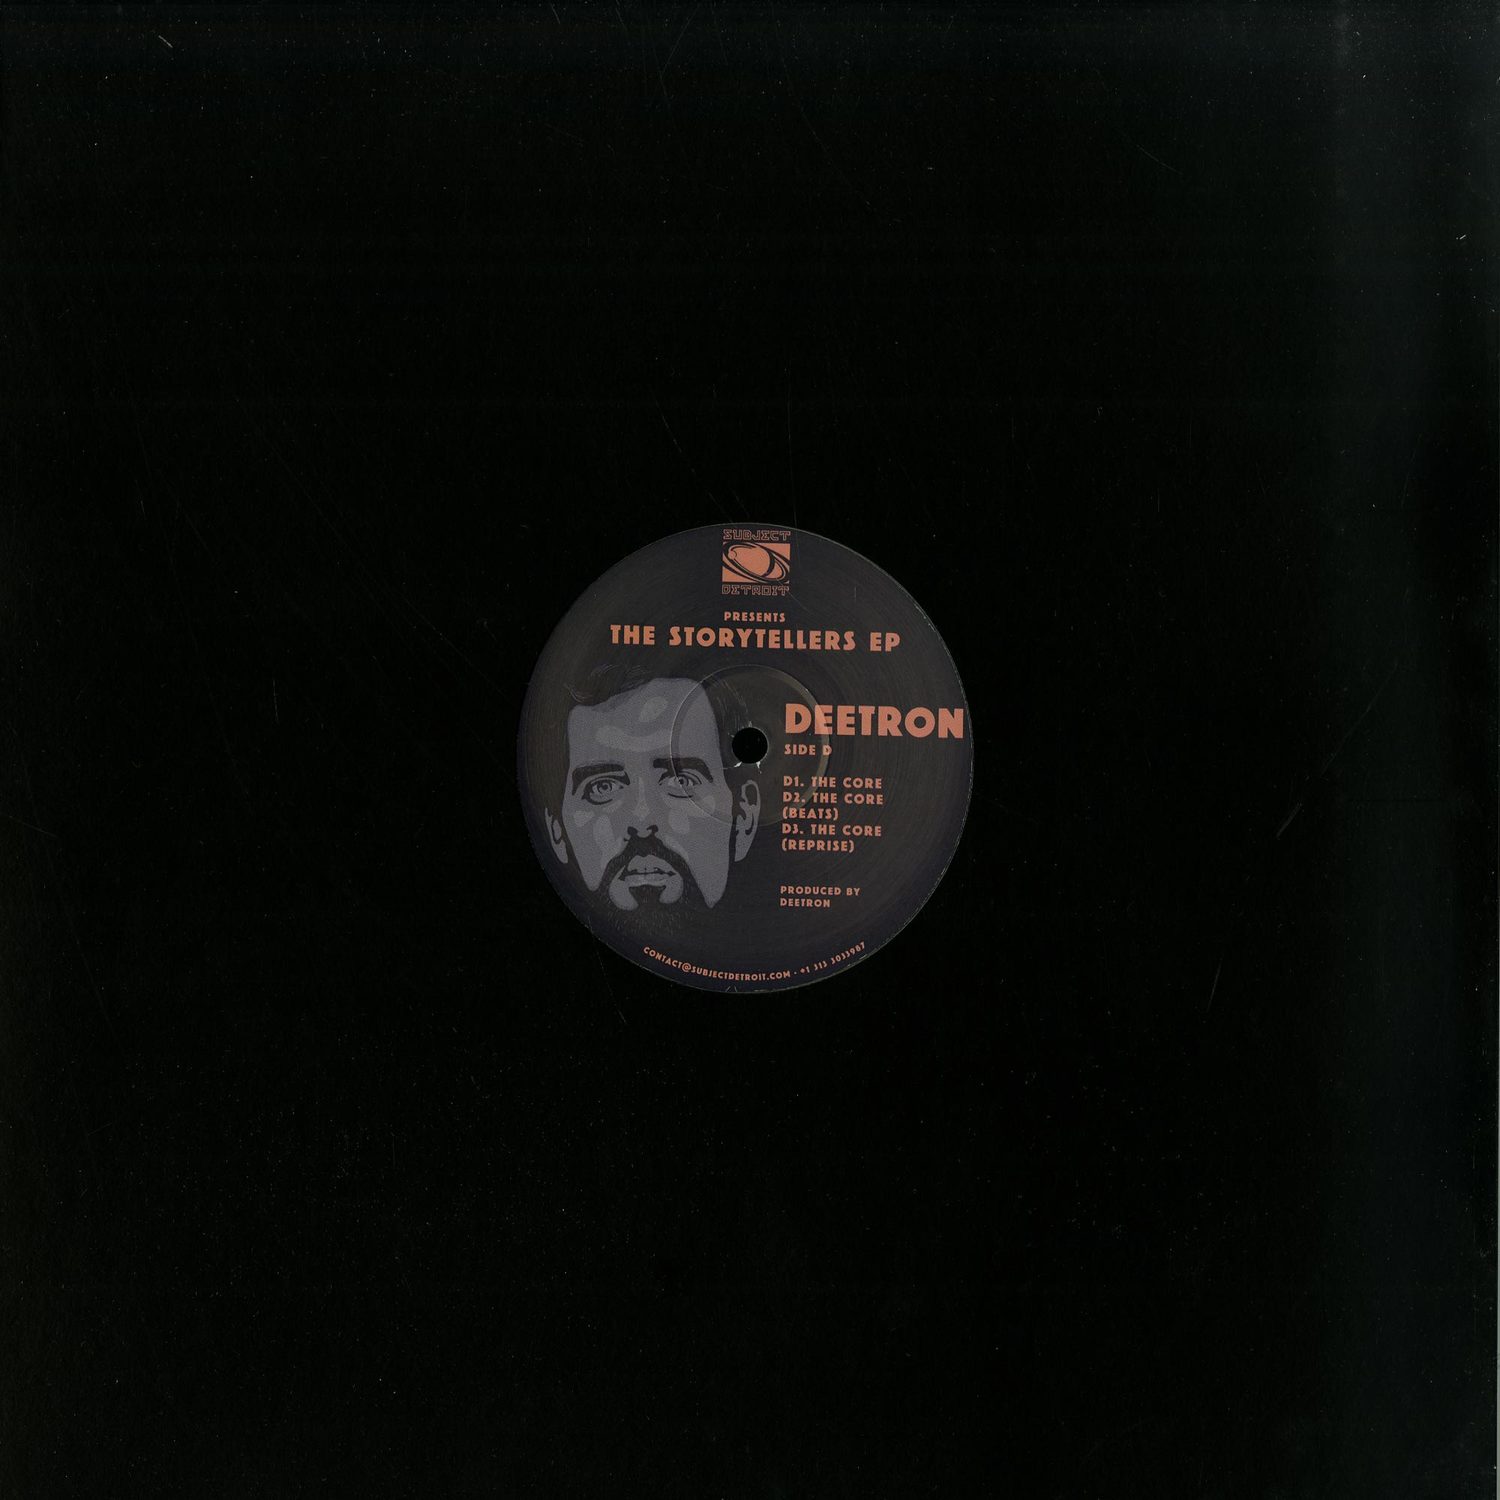 DJ Bone & Deetron - THE STORYTELLERS EP 